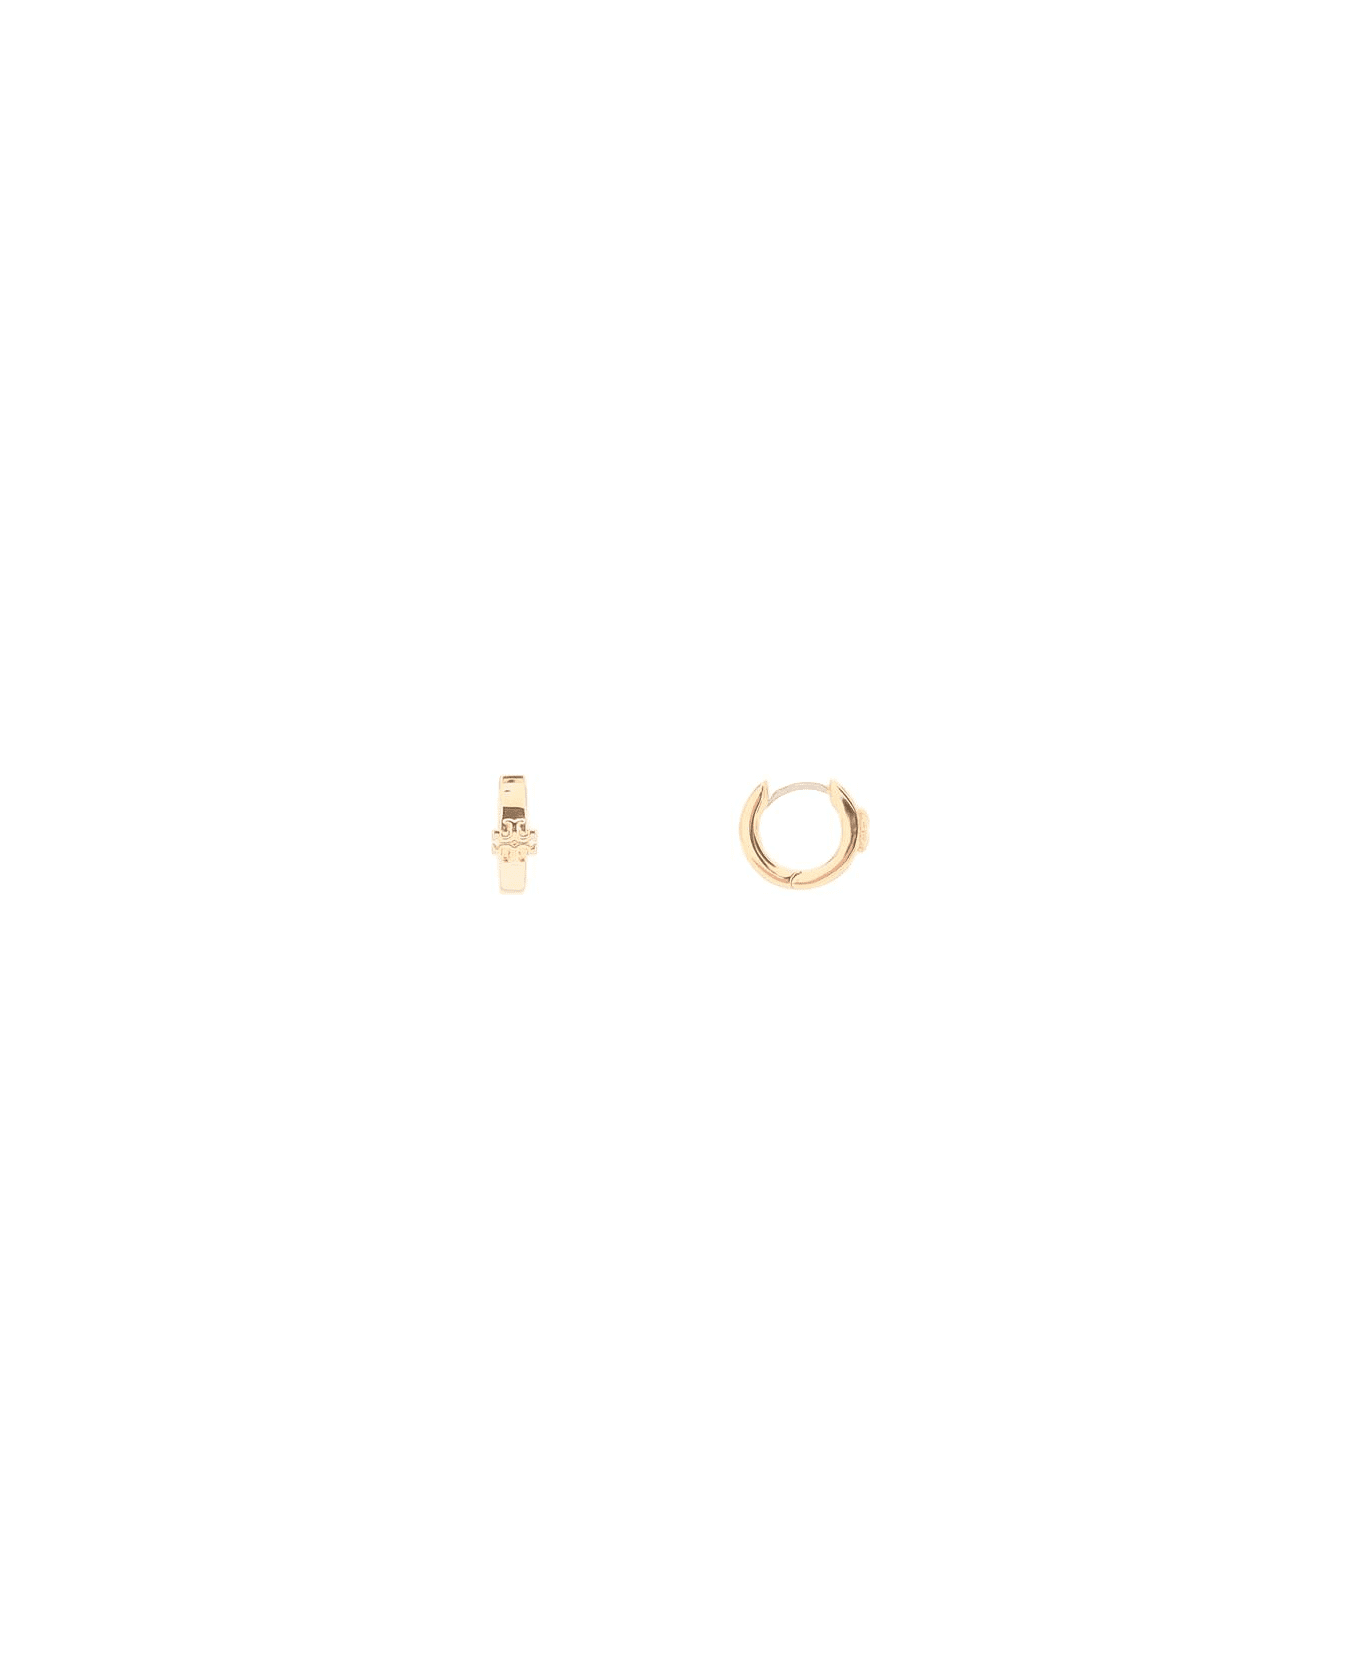 Tory Burch Kira Huggie Earrings - Gold イヤリング